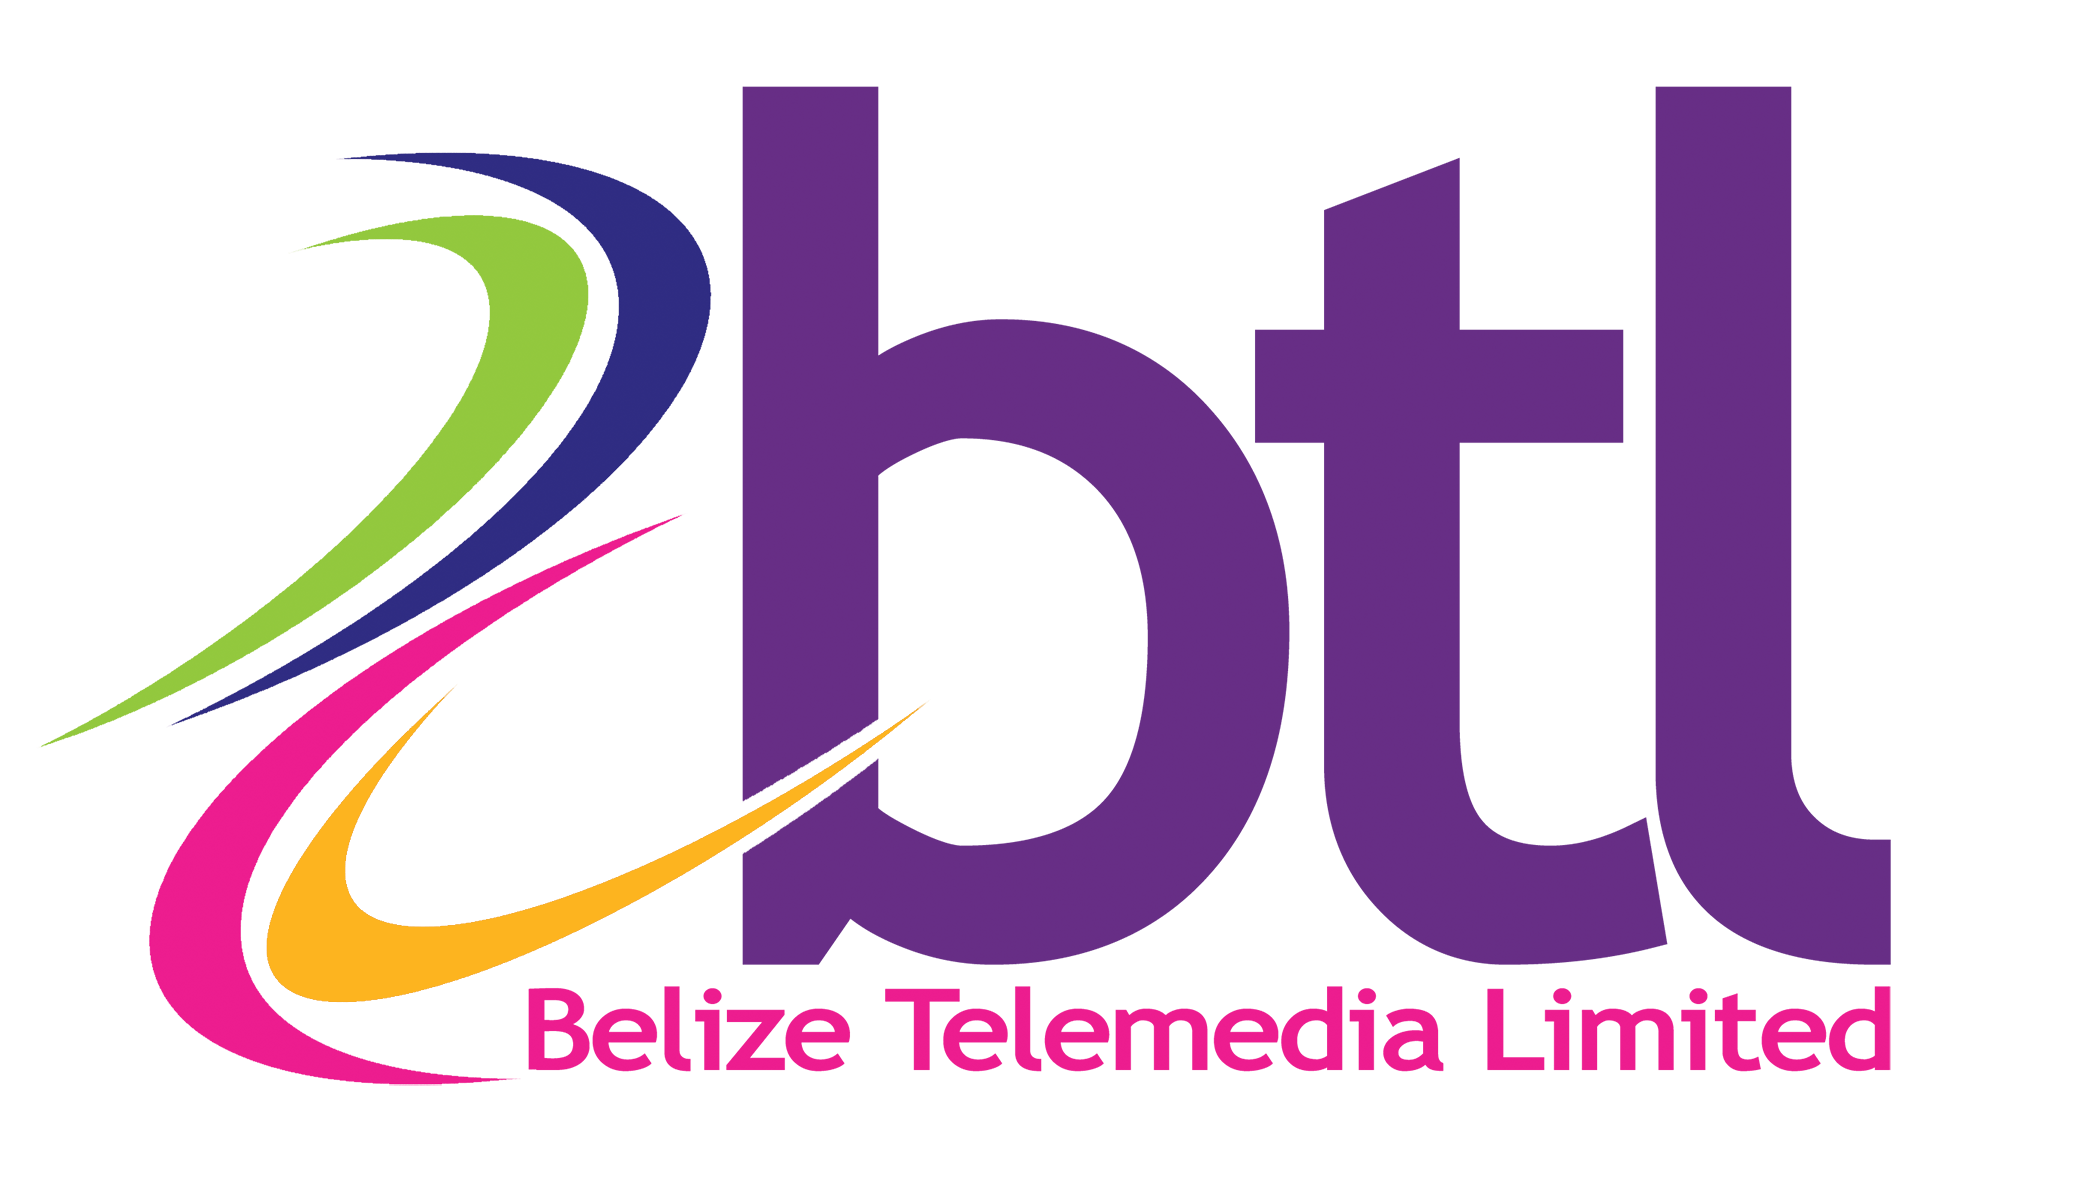 Bze Logo - Belize Telemedia Limited